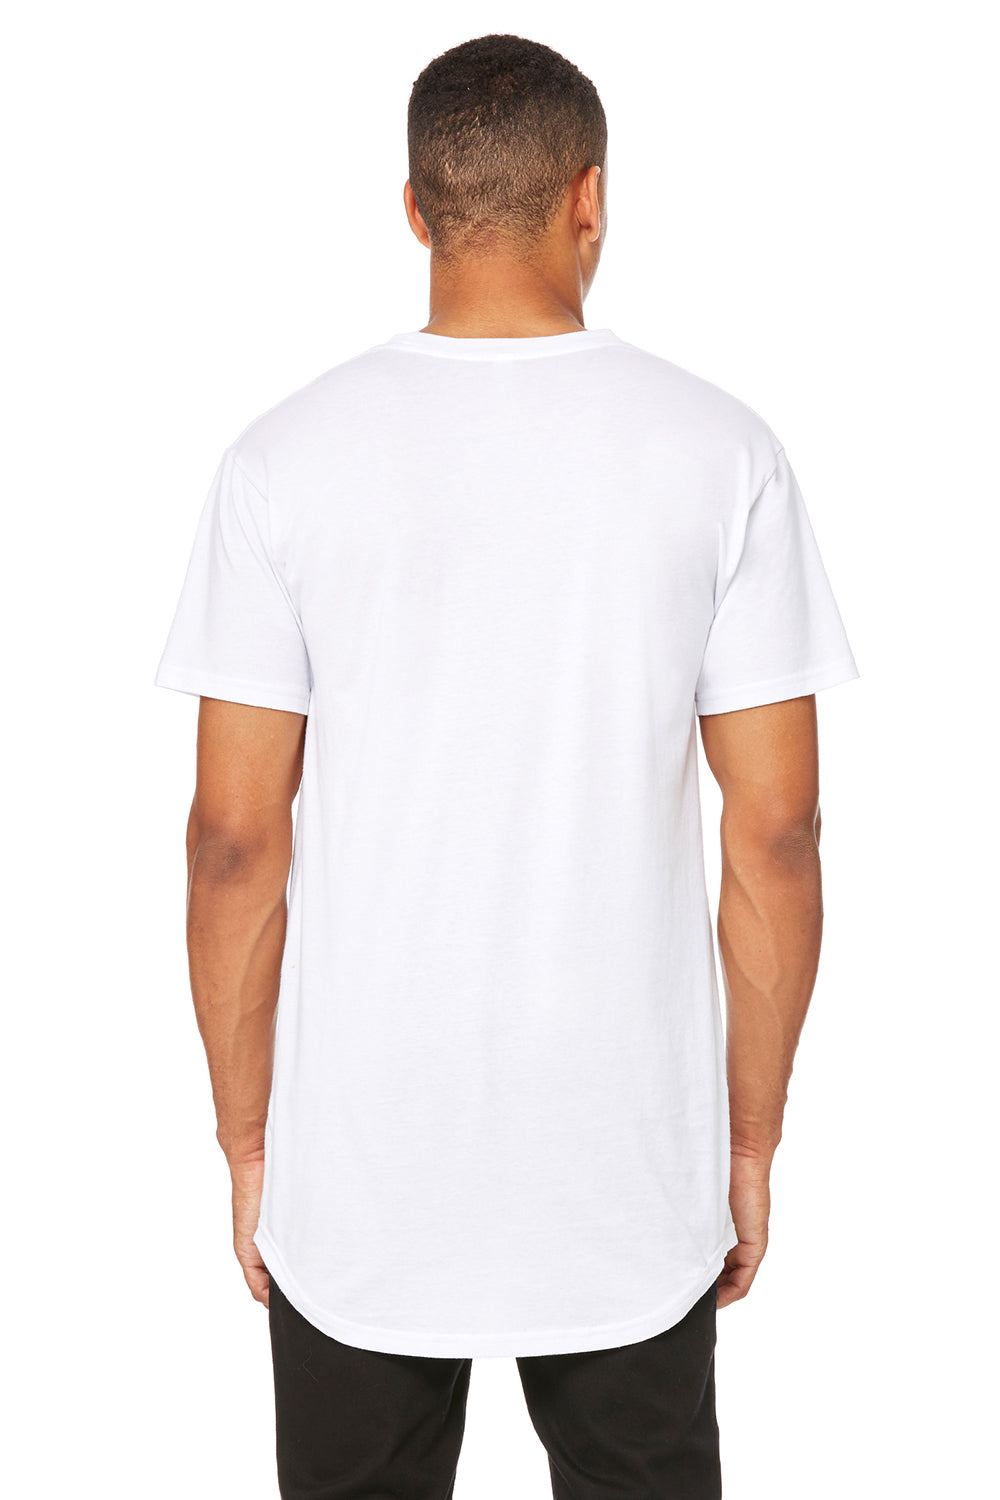 Bella + Canvas 3006 Mens Long Body Urban Short Sleeve Crewneck T-Shirt White Model Back